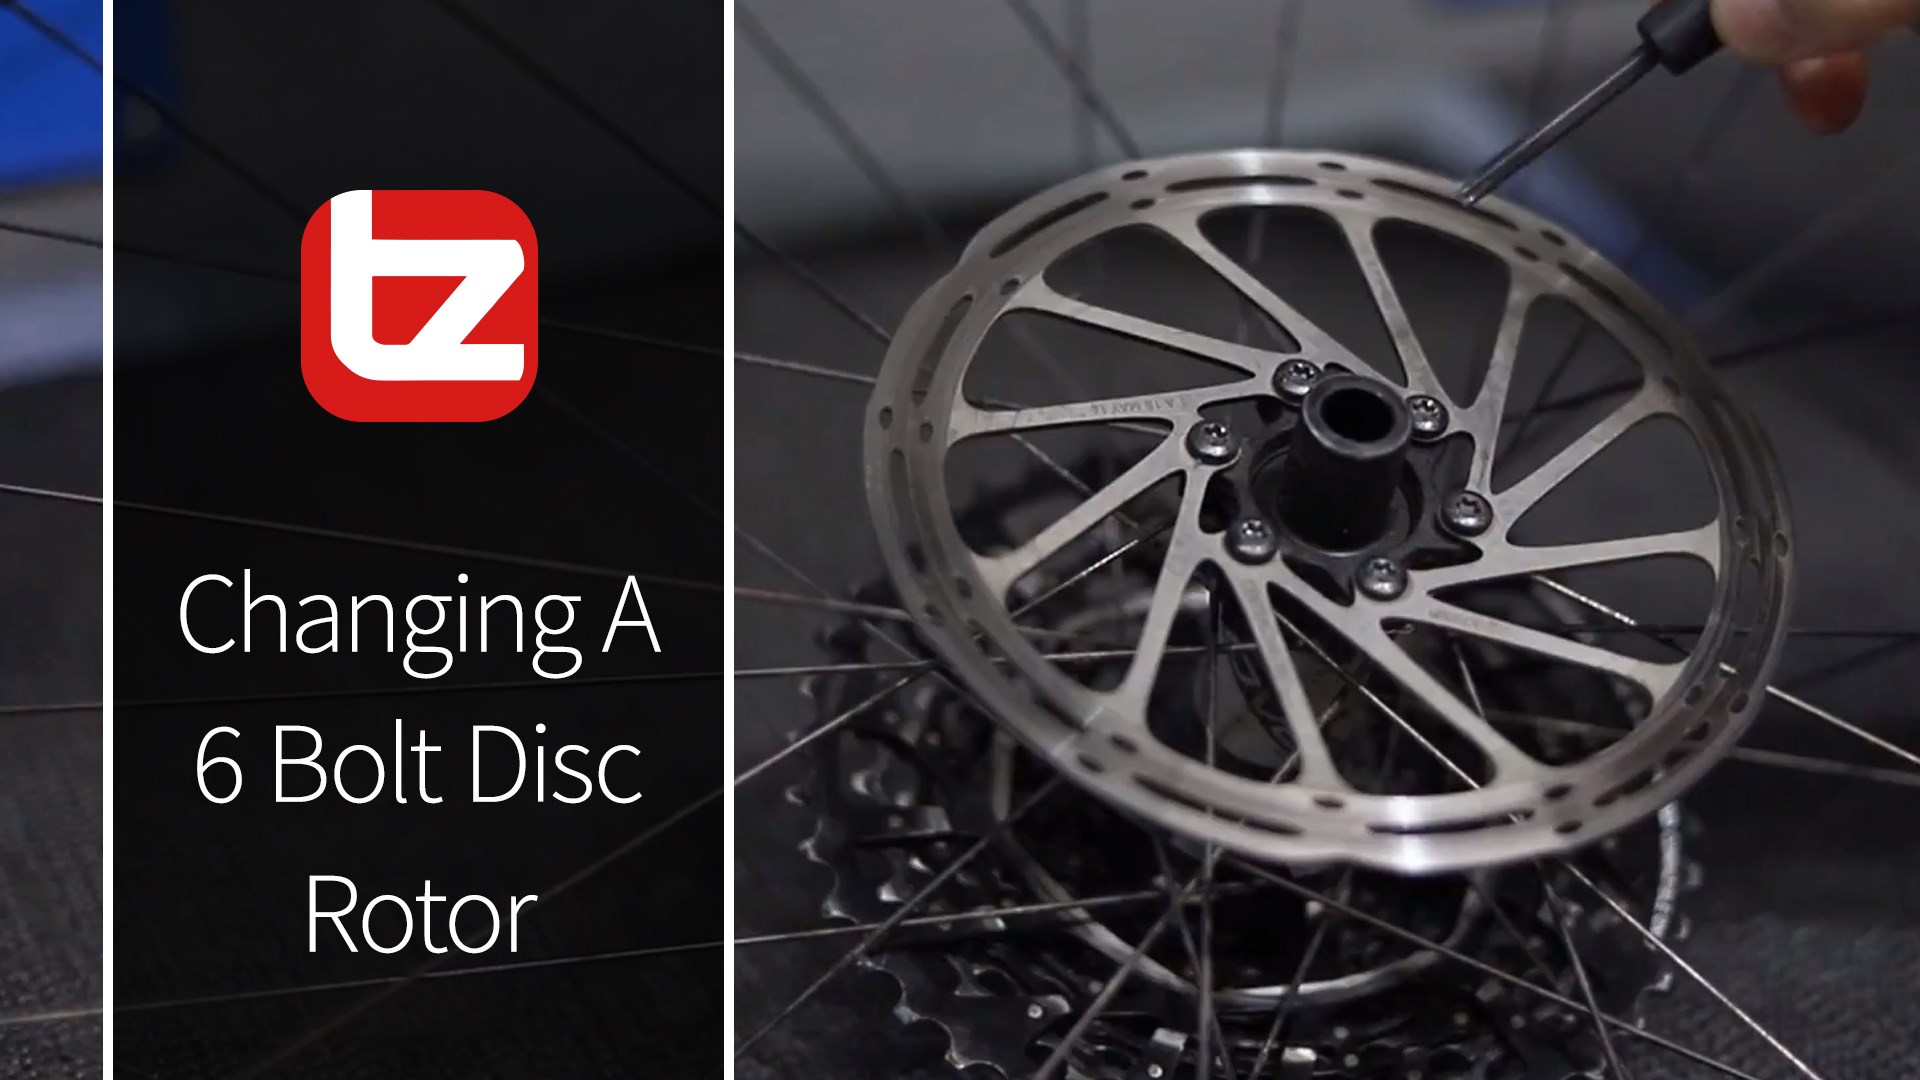 How To Change A 6 Bolt Disc Brake Rotor | Tech Tip | Tredz Bikes